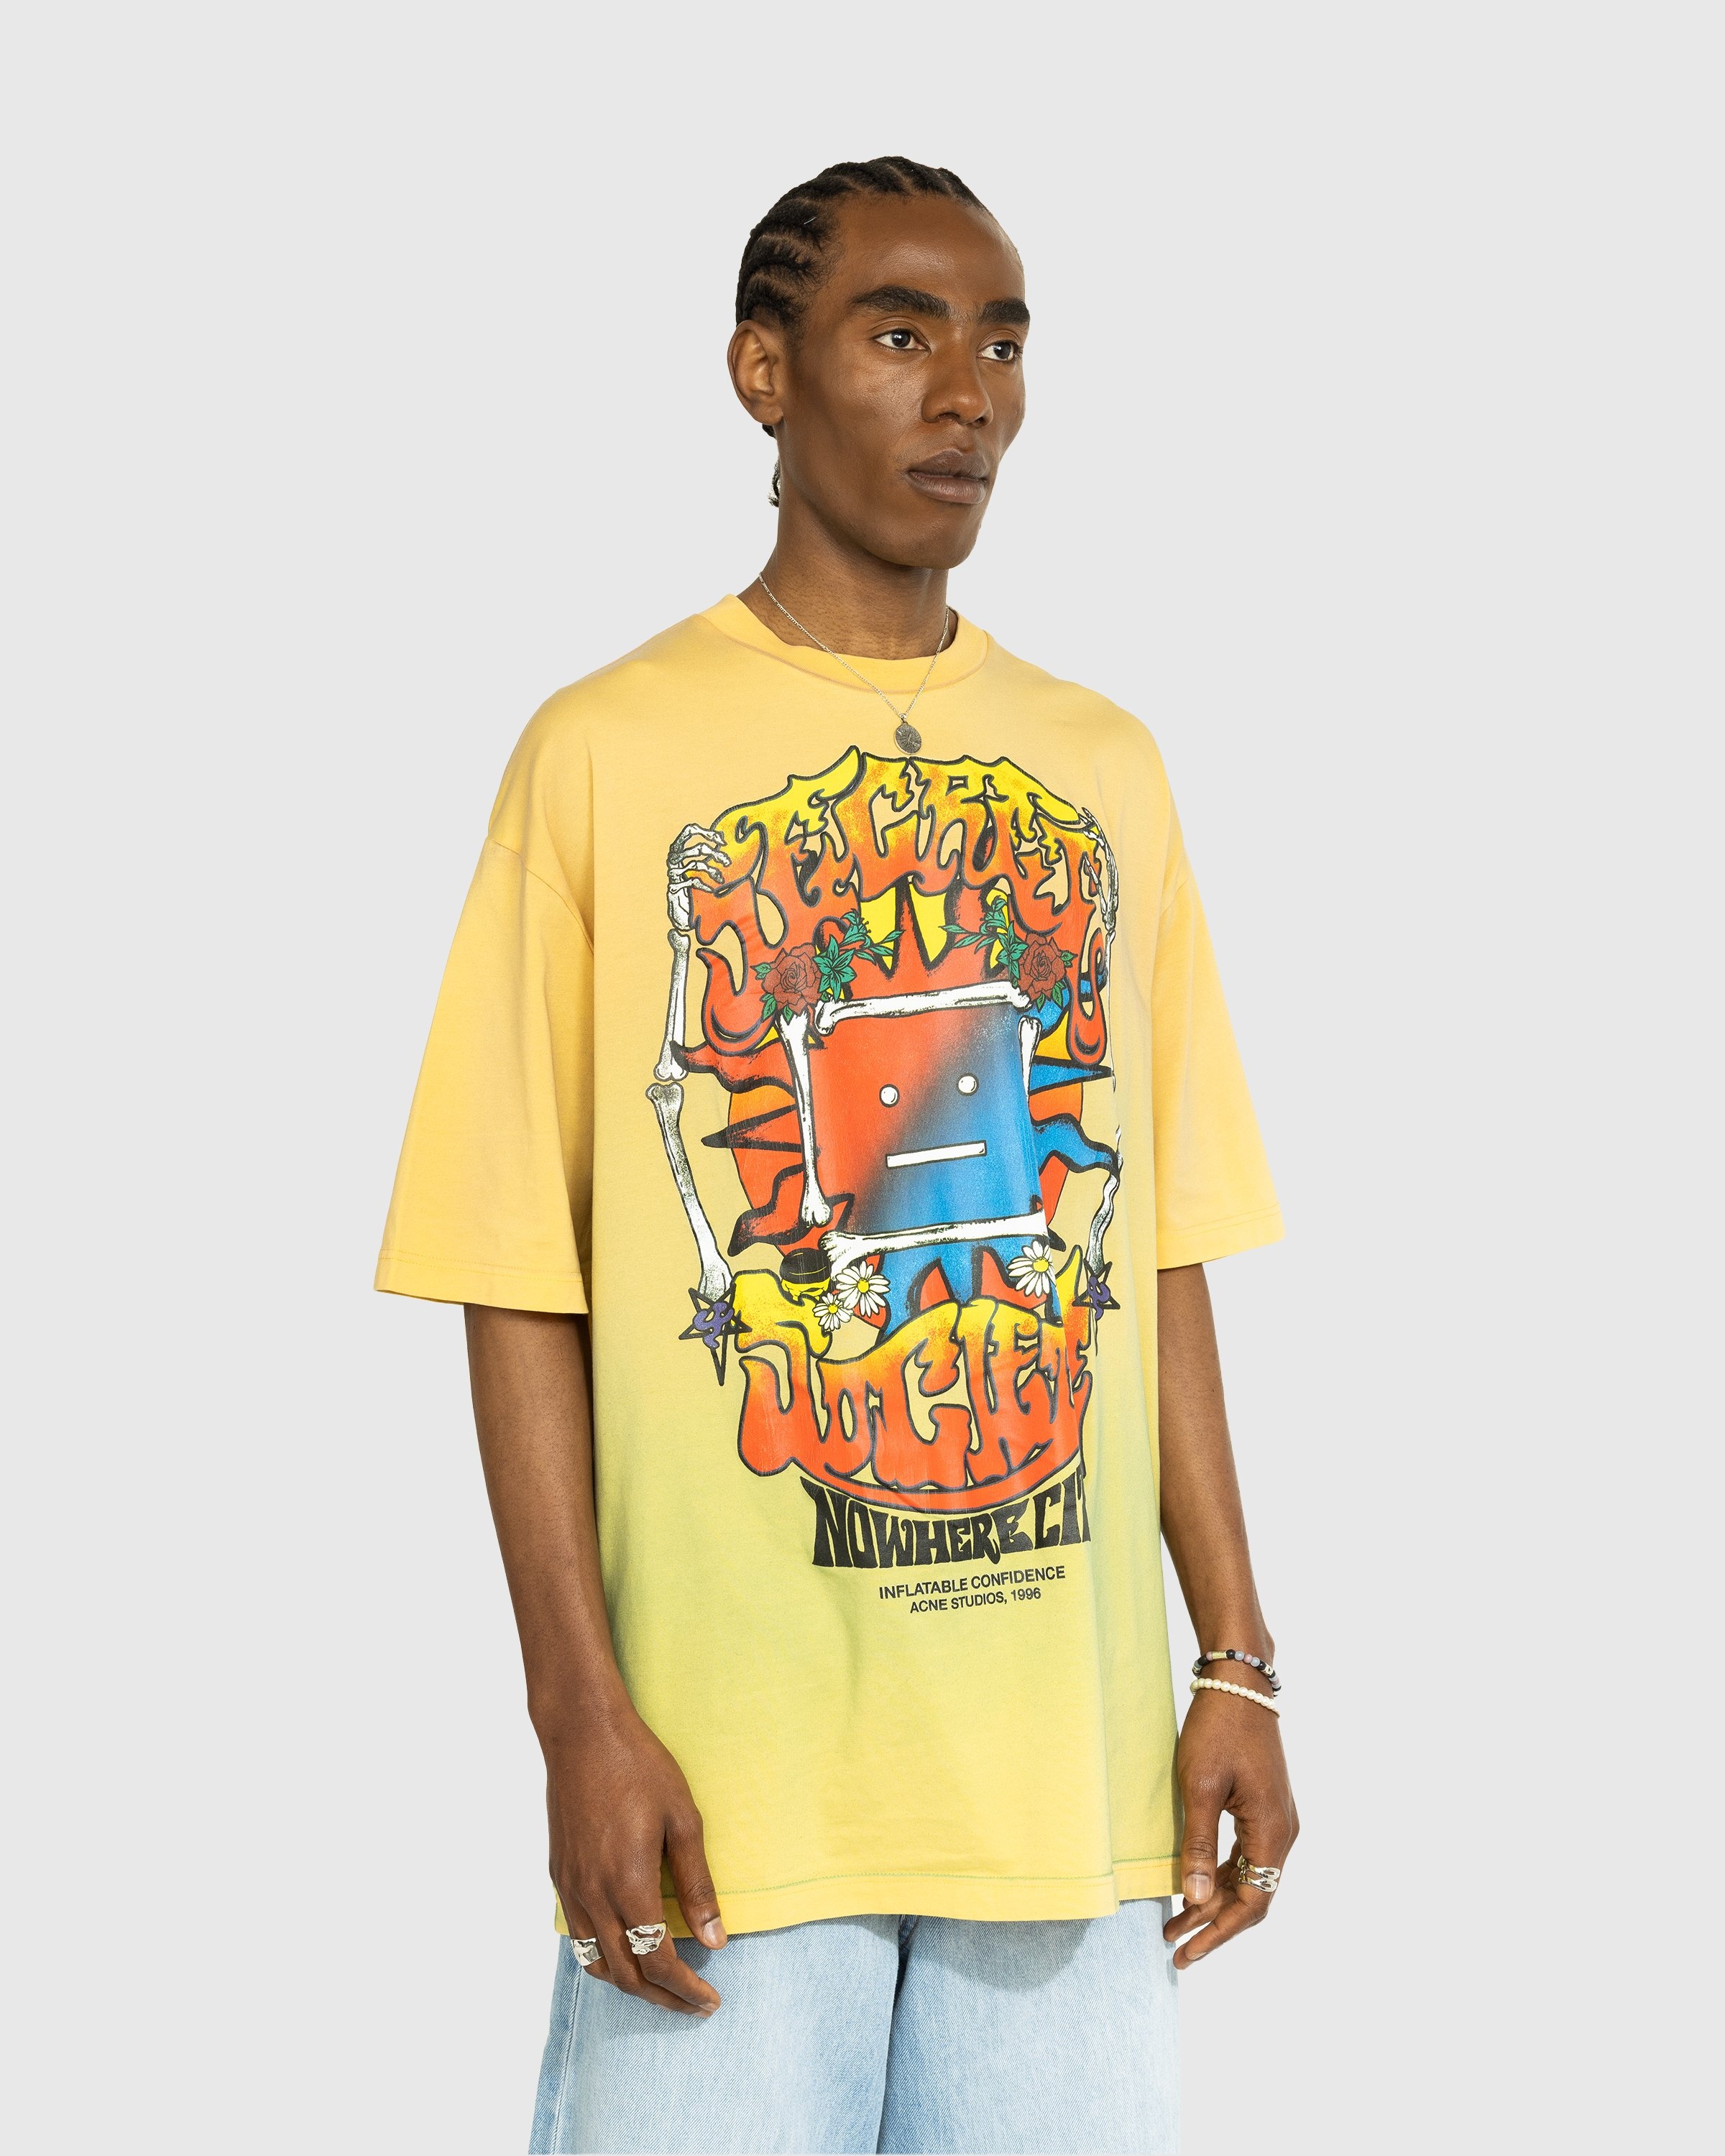 Acne Studios – Cracked Print T-Shirt Multi - Tops - Multi - Image 2